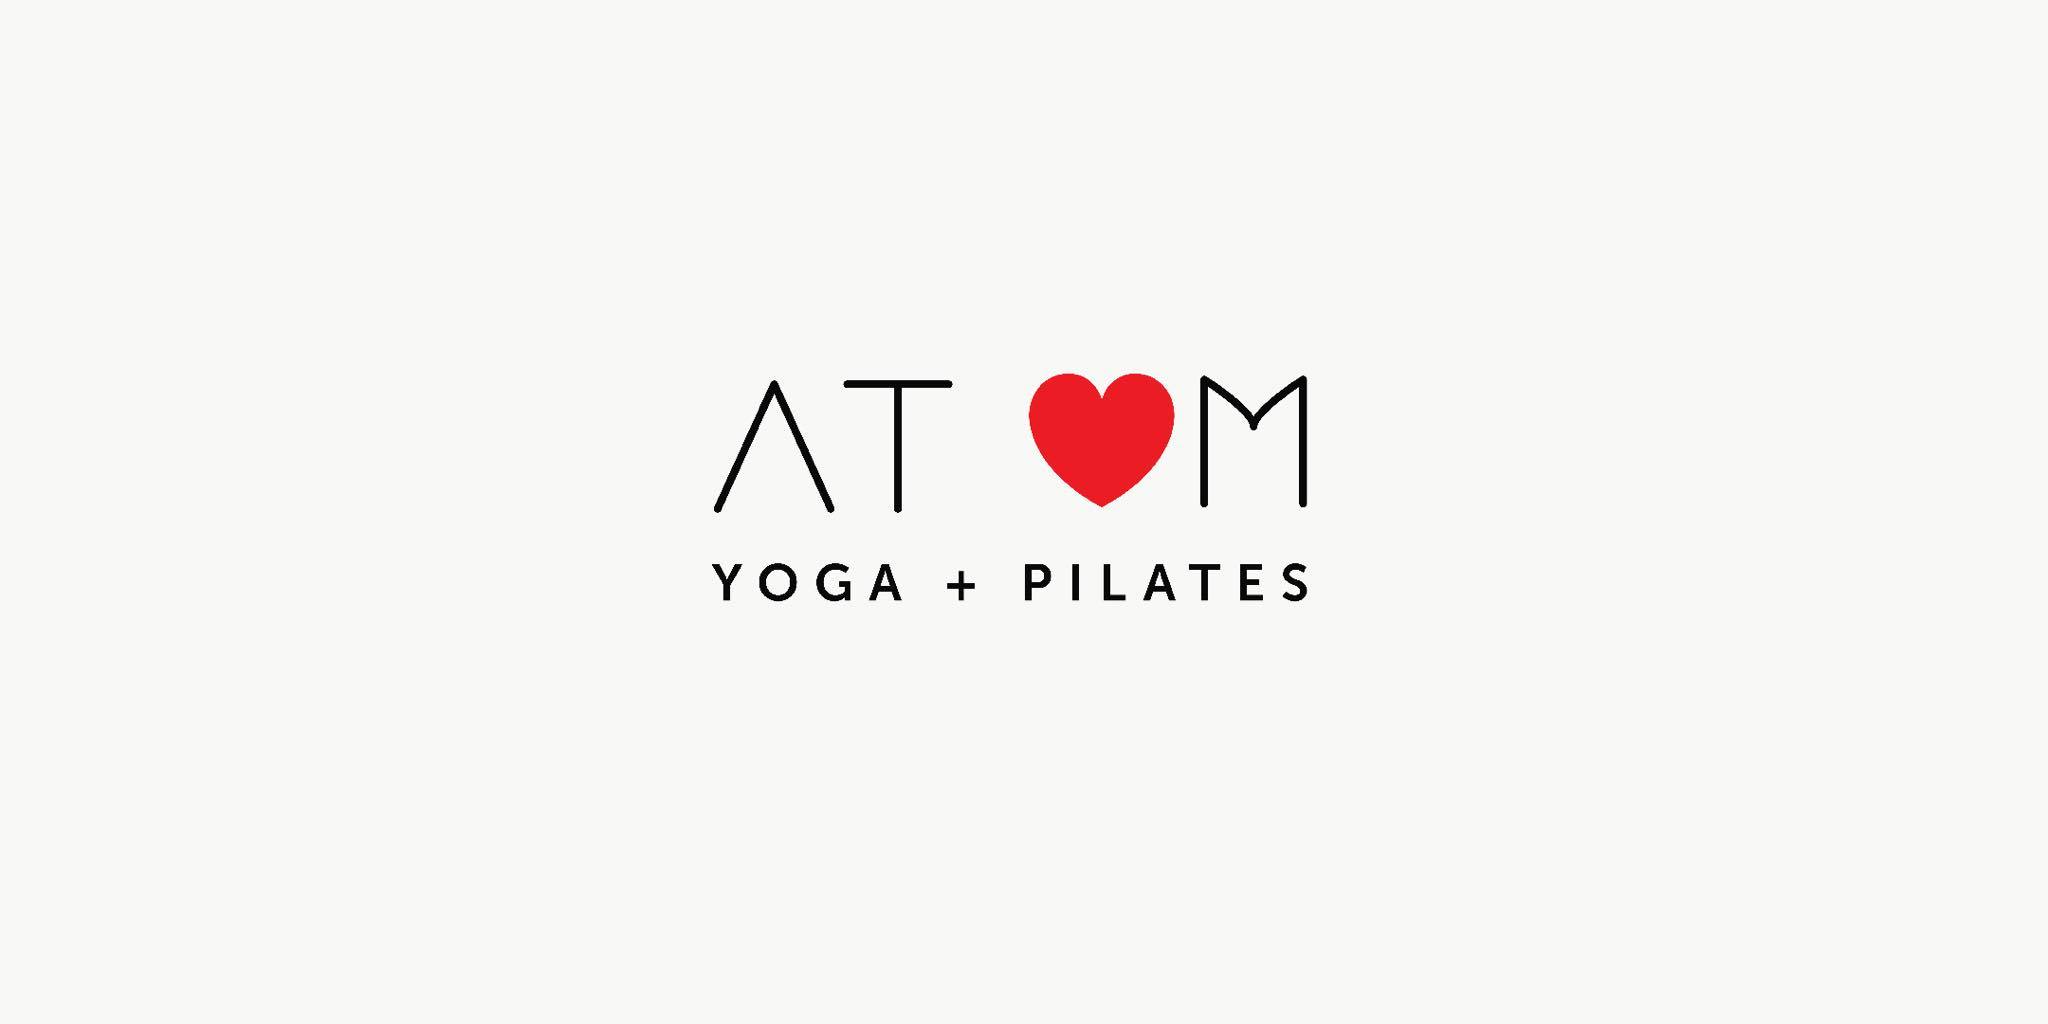 Mat Pilates – Nov 28